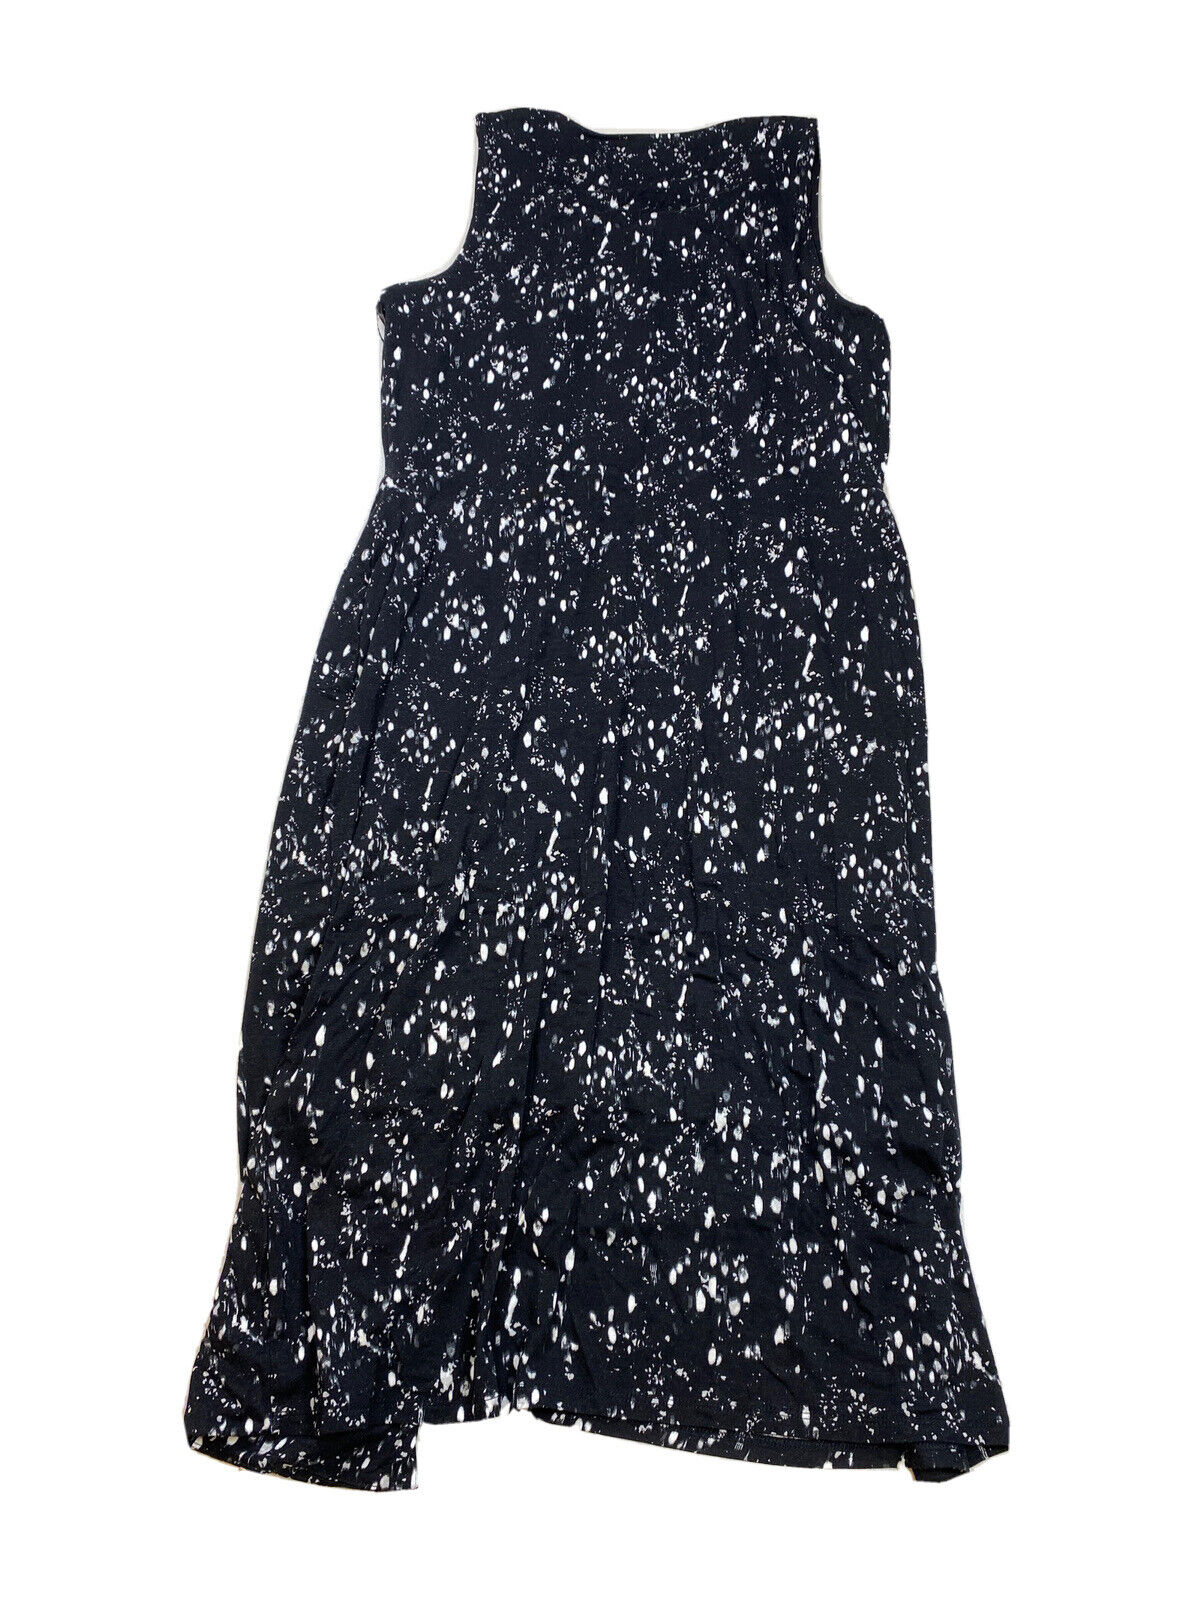 NEW Simply Vera Wang Women's Black Sleeveless Stretch Faux Wrap Dress - M